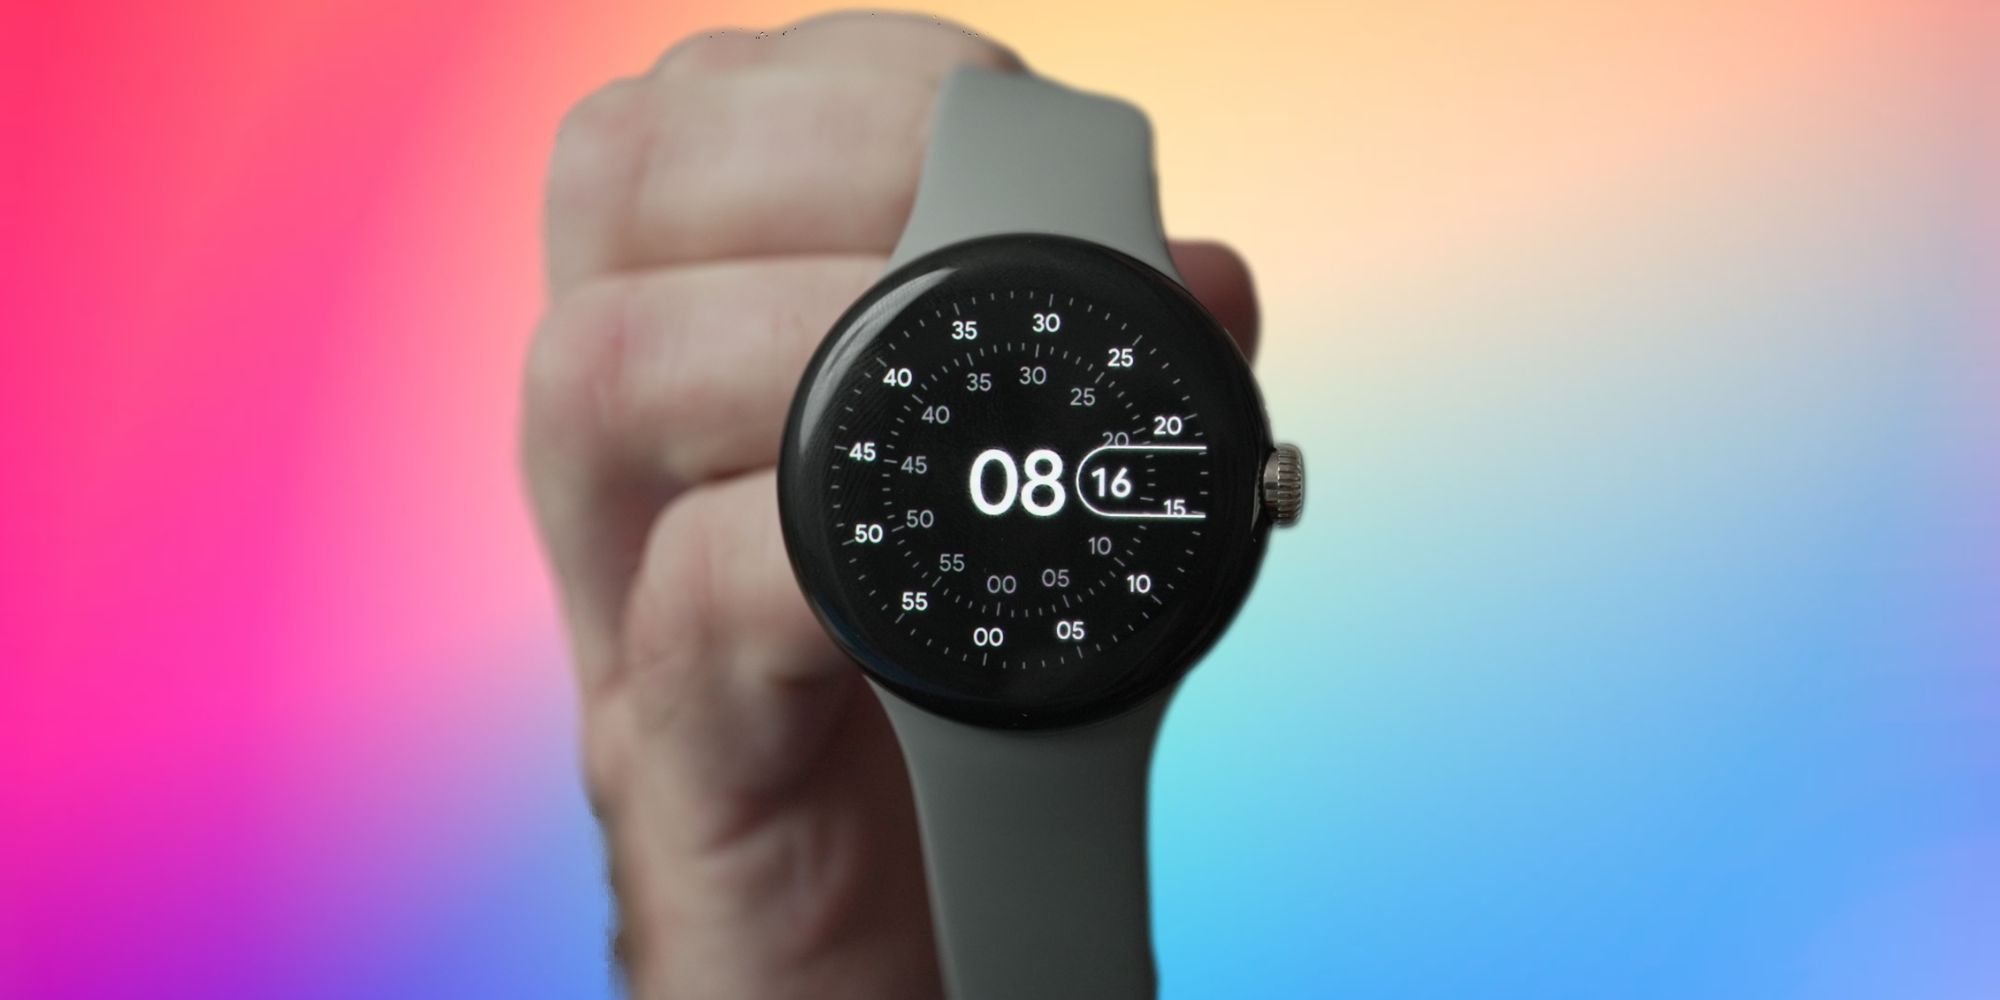 Puro Gran roble Hazme Pixel Watch – What was Google thinking?